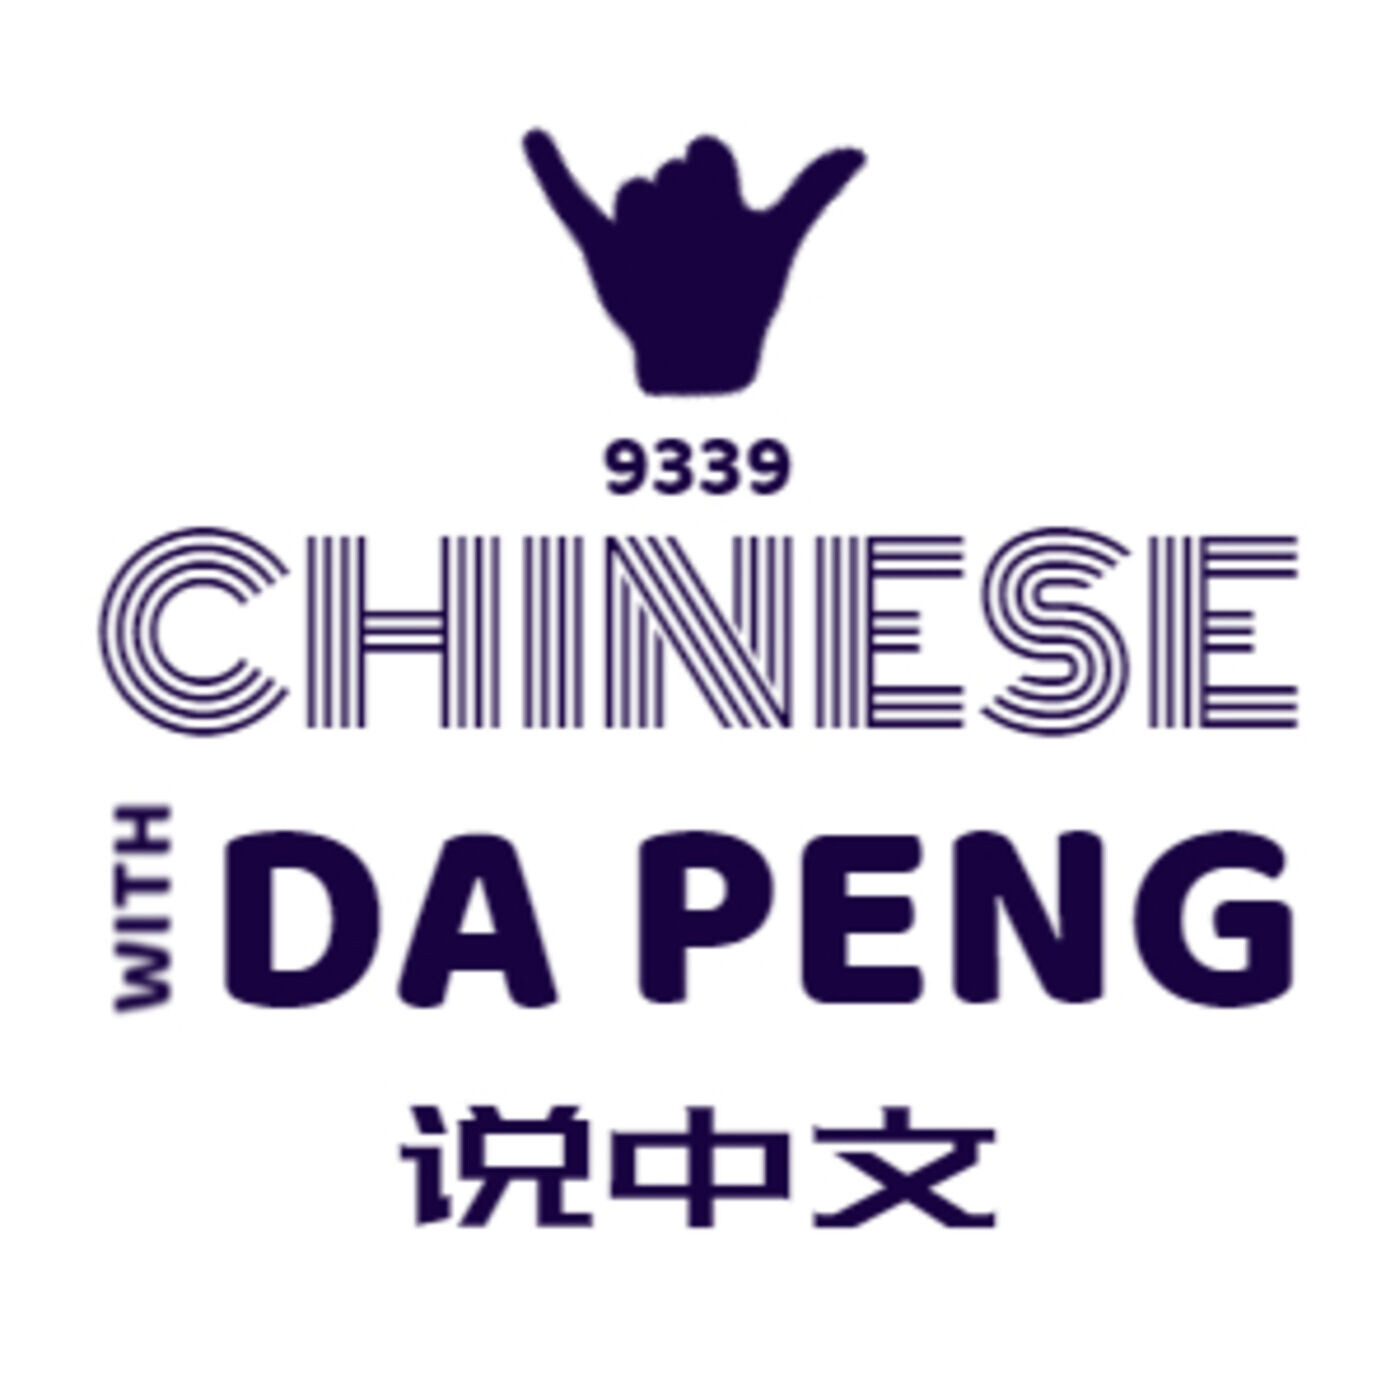 Chinese talk